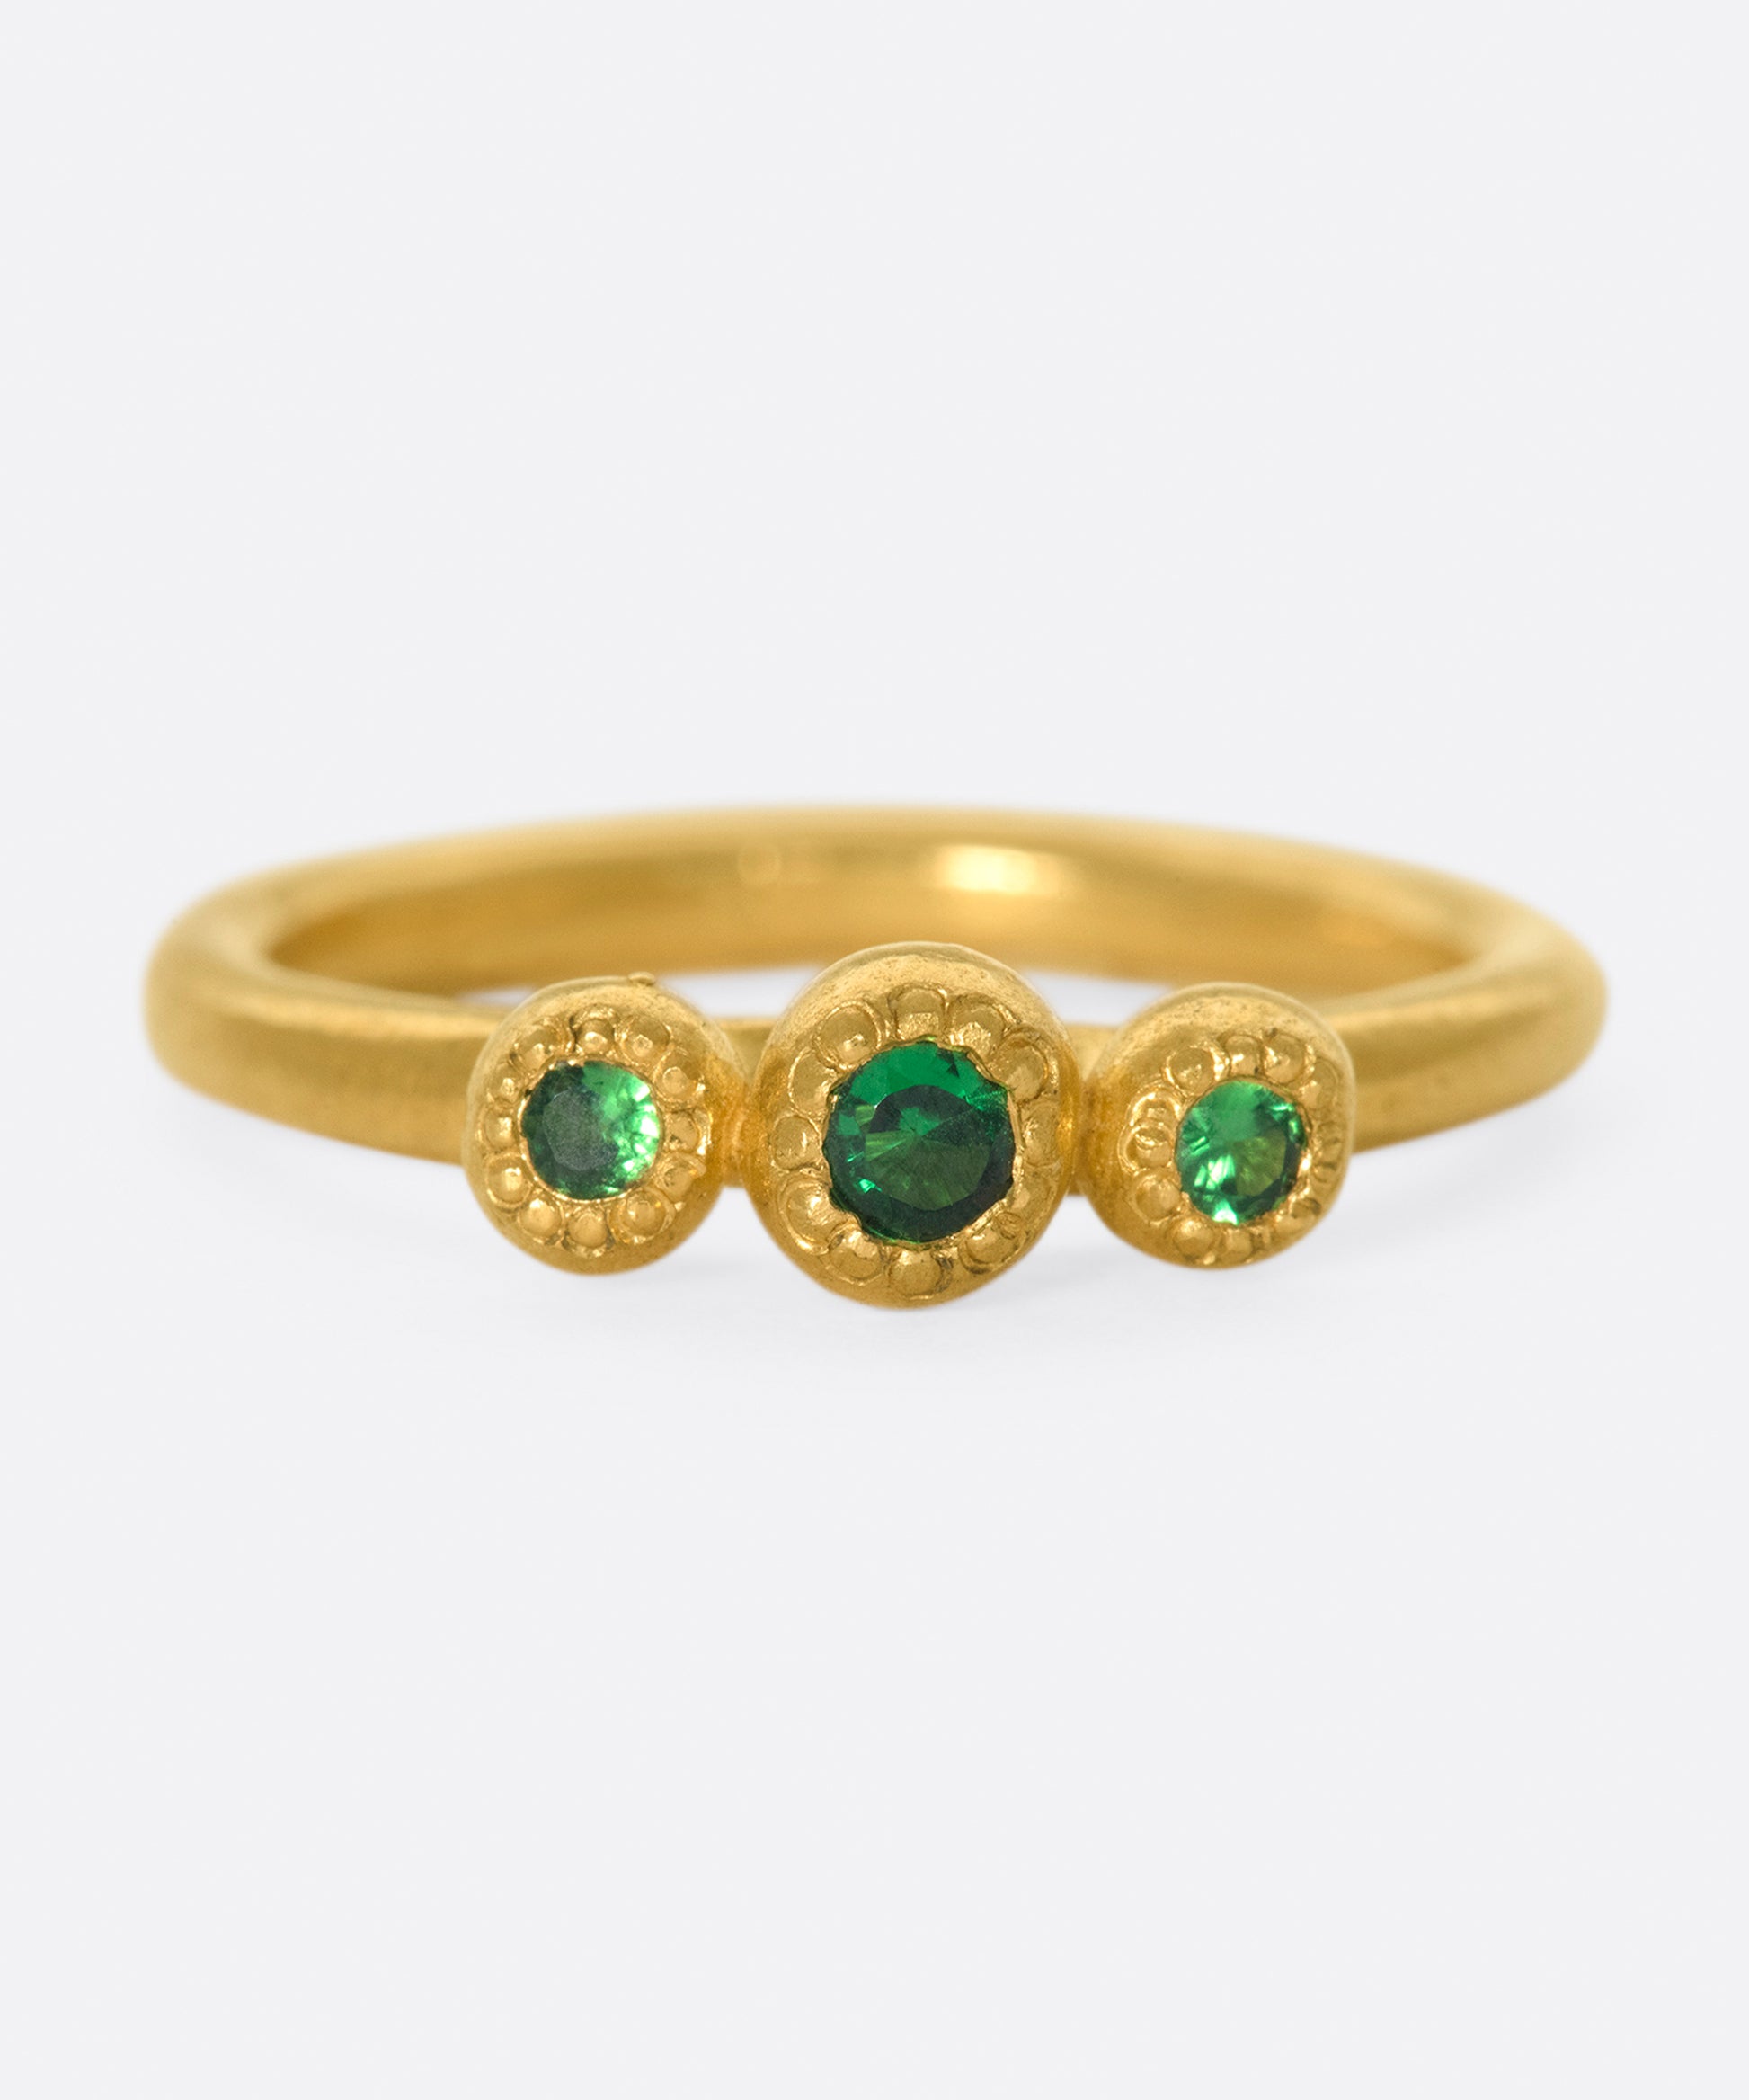 A hand sculpted three stone ring with vivid green tsavorite garnets.